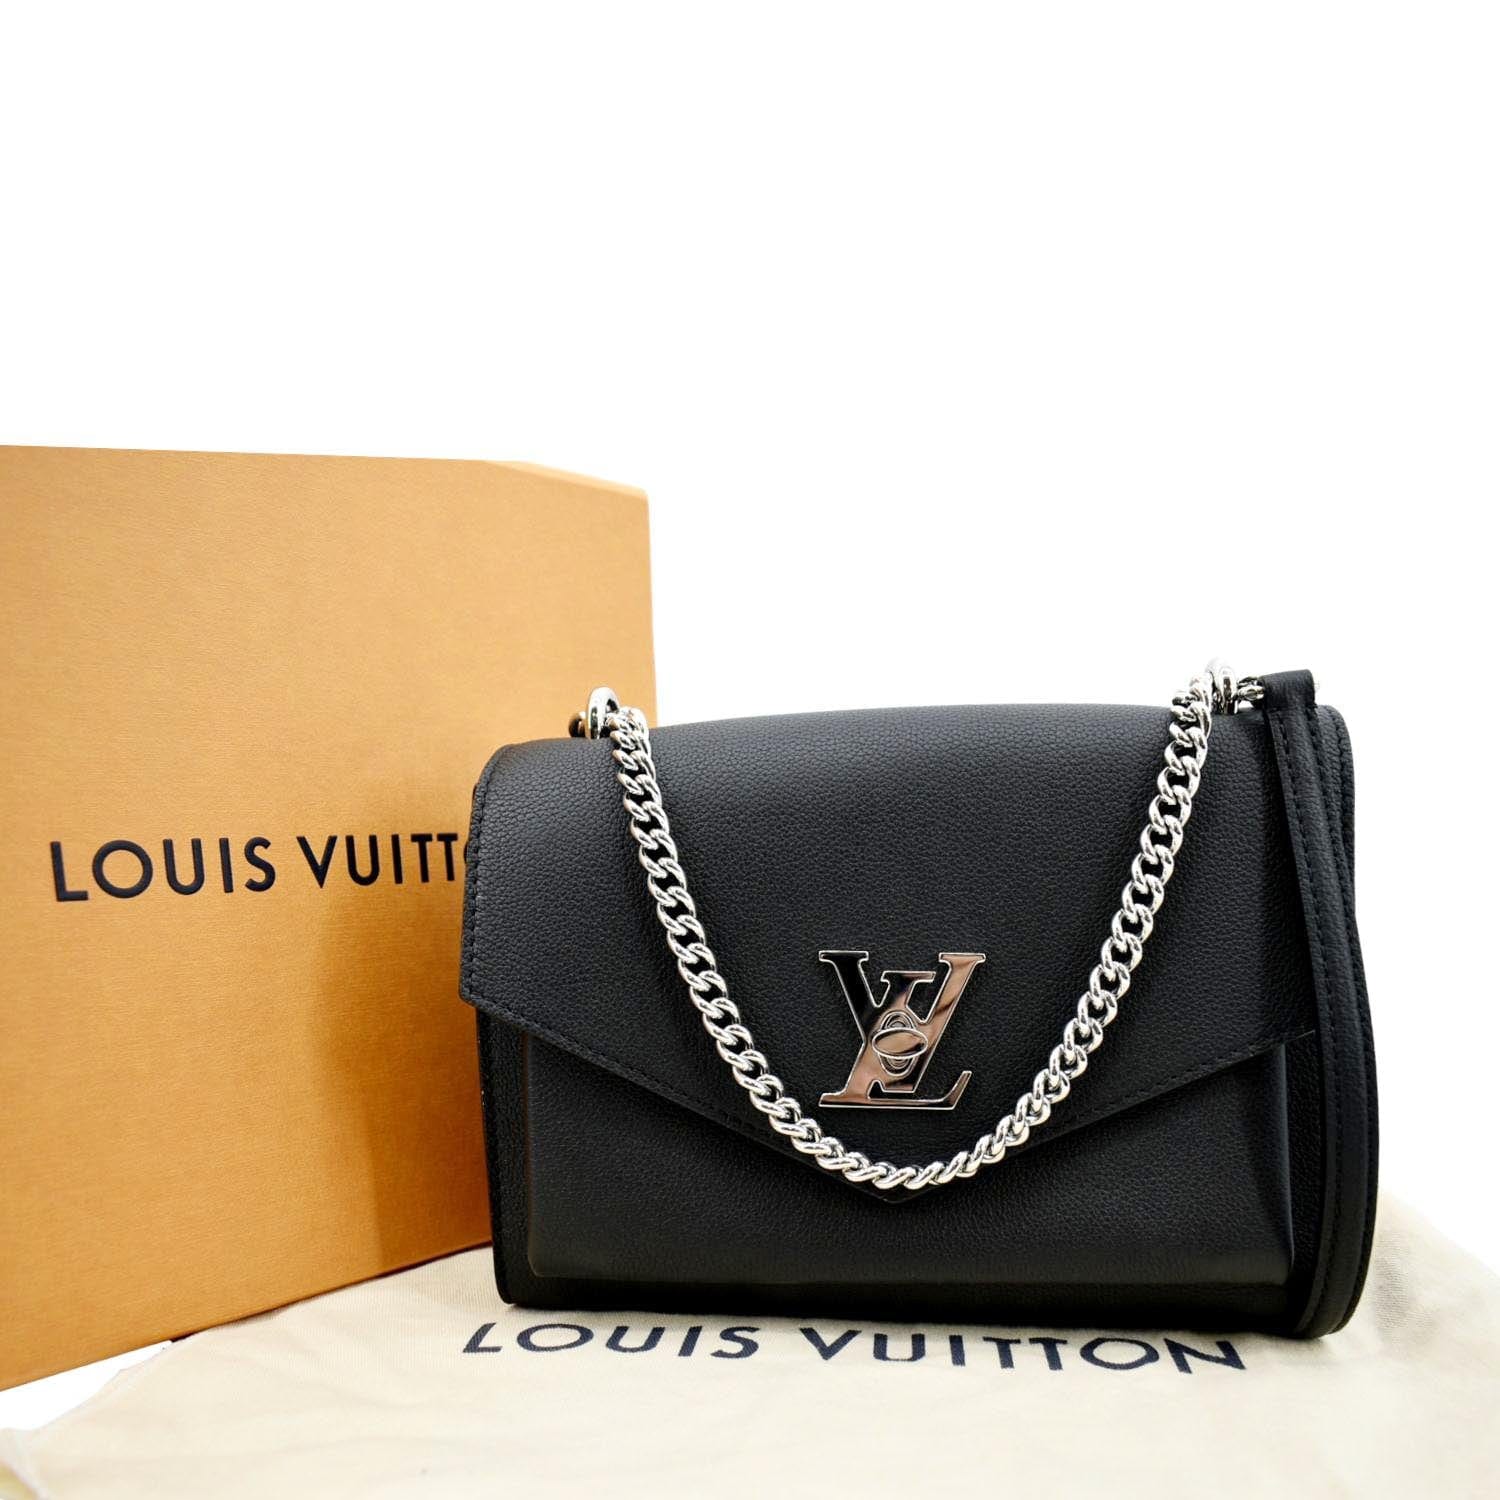 louis vuitton black bag with silver chain